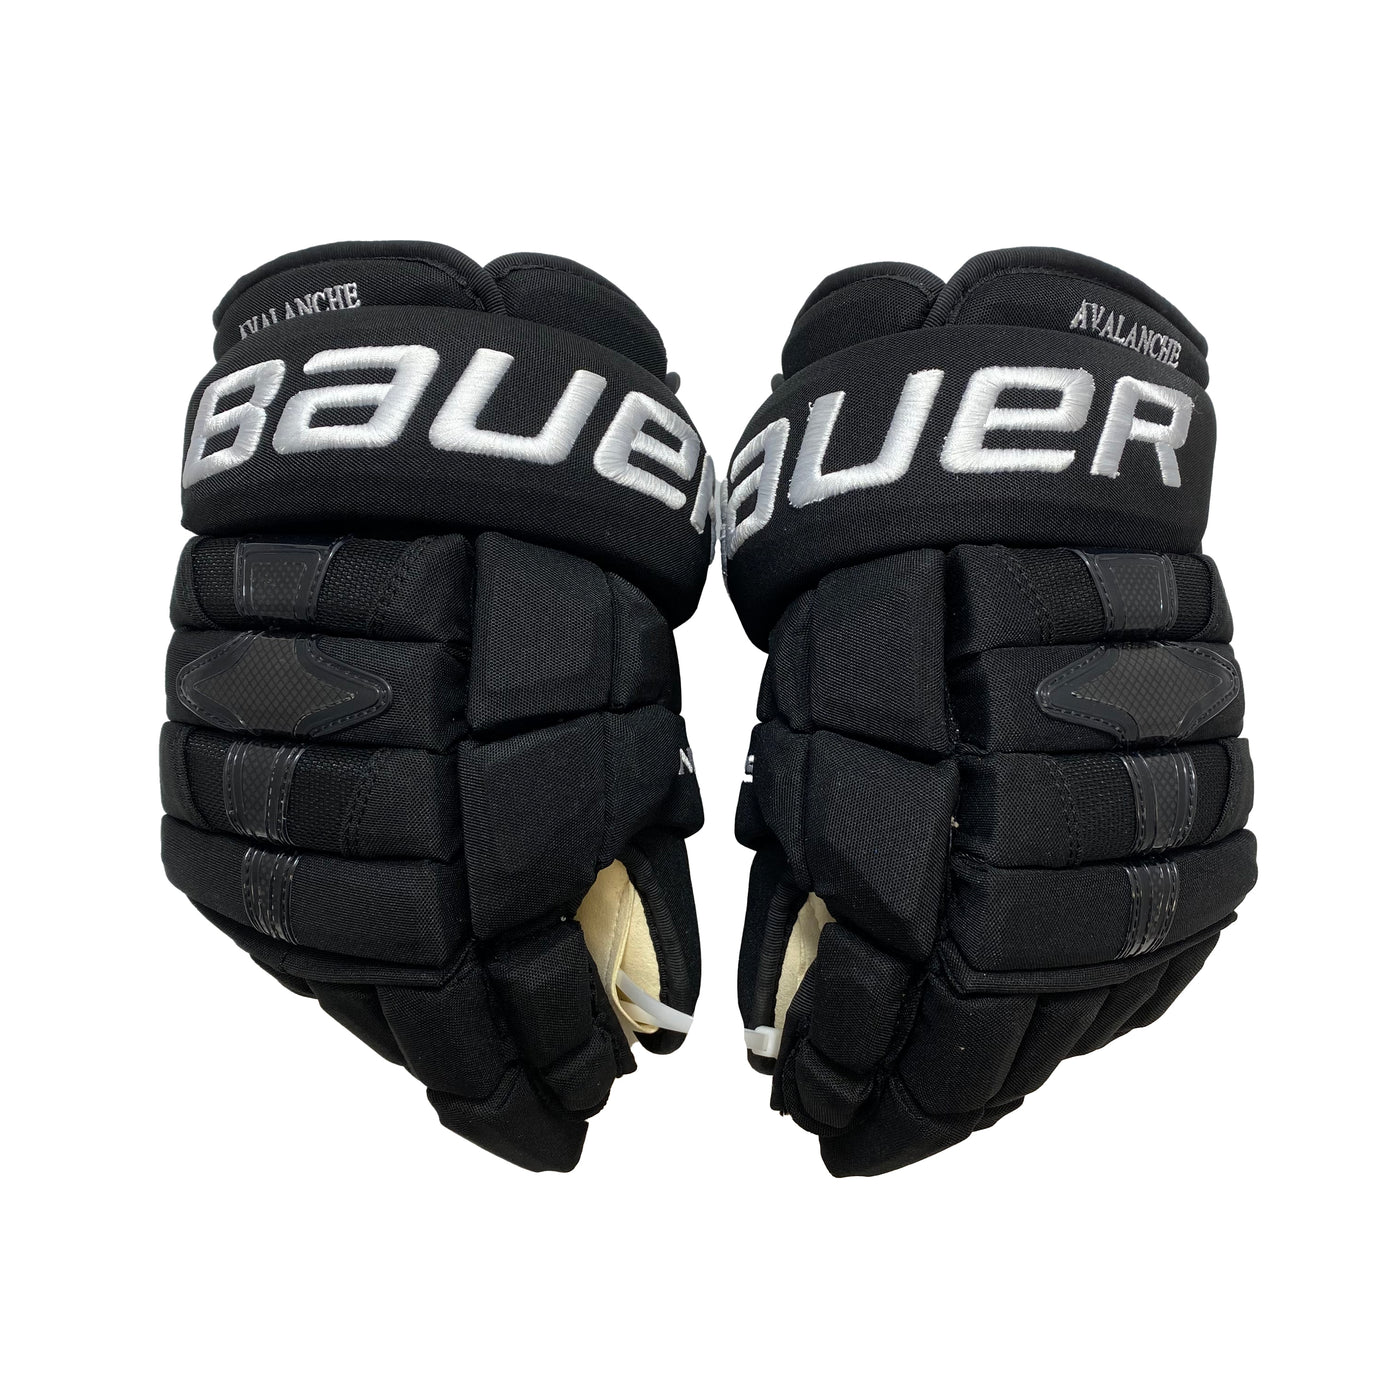 Bauer Nexus 1N - Colorado Avalanche - Pro Stock Hockey Gloves - Team Issue